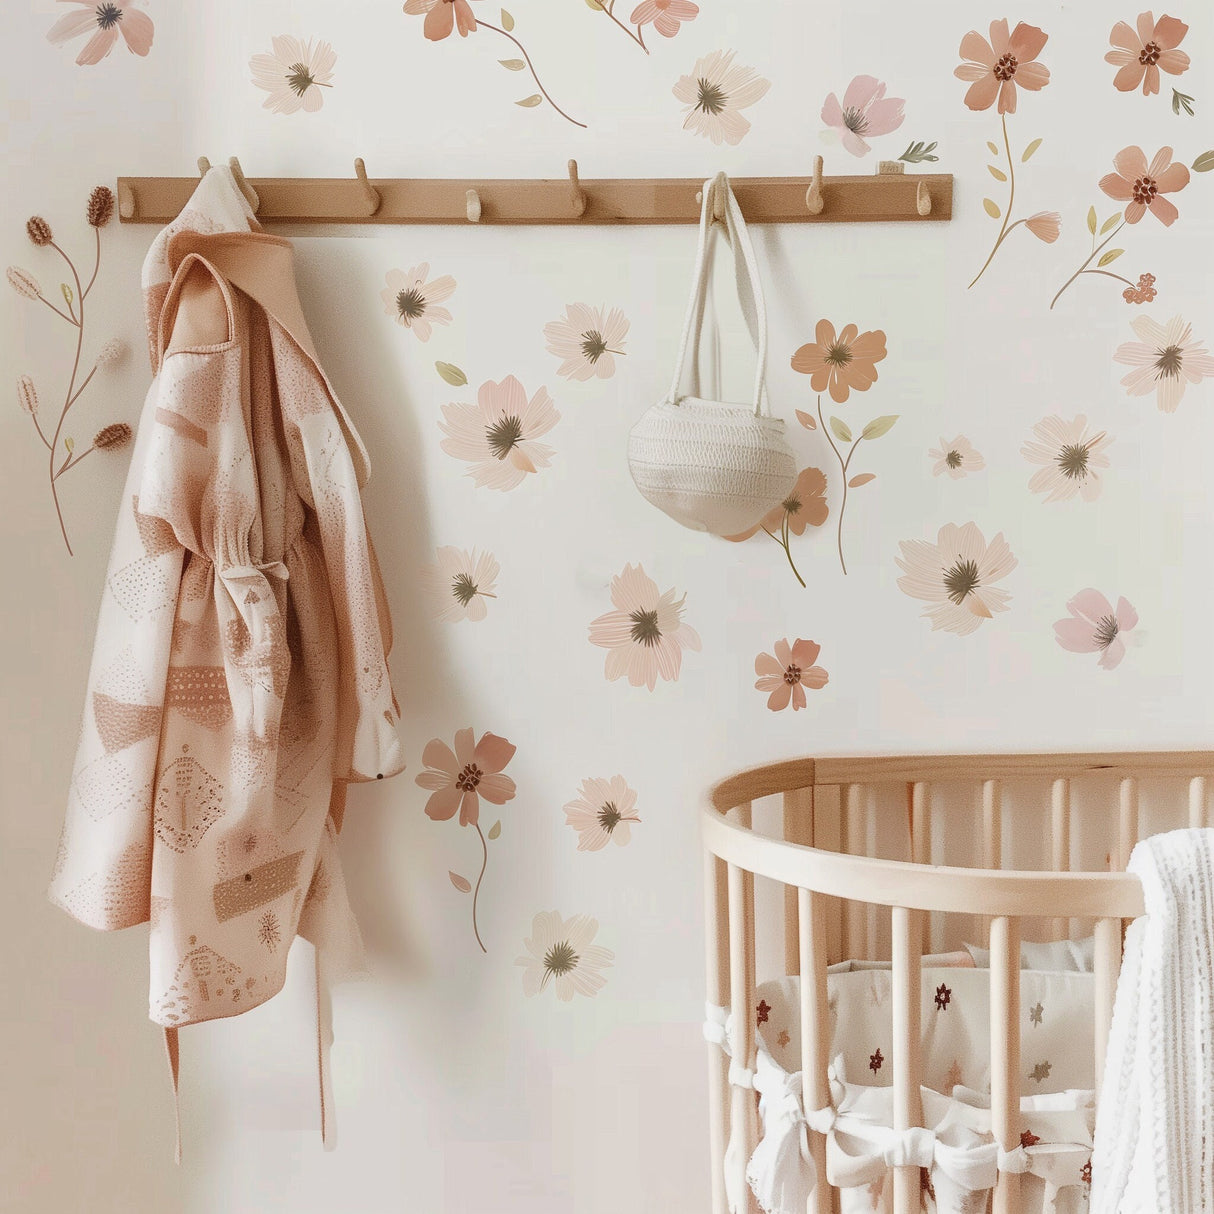 Boho Nursery Floral Flower Wall Decals - Removable Floral Nursery Wall Stickers - Boho Wall Decal for Baby Room Decor